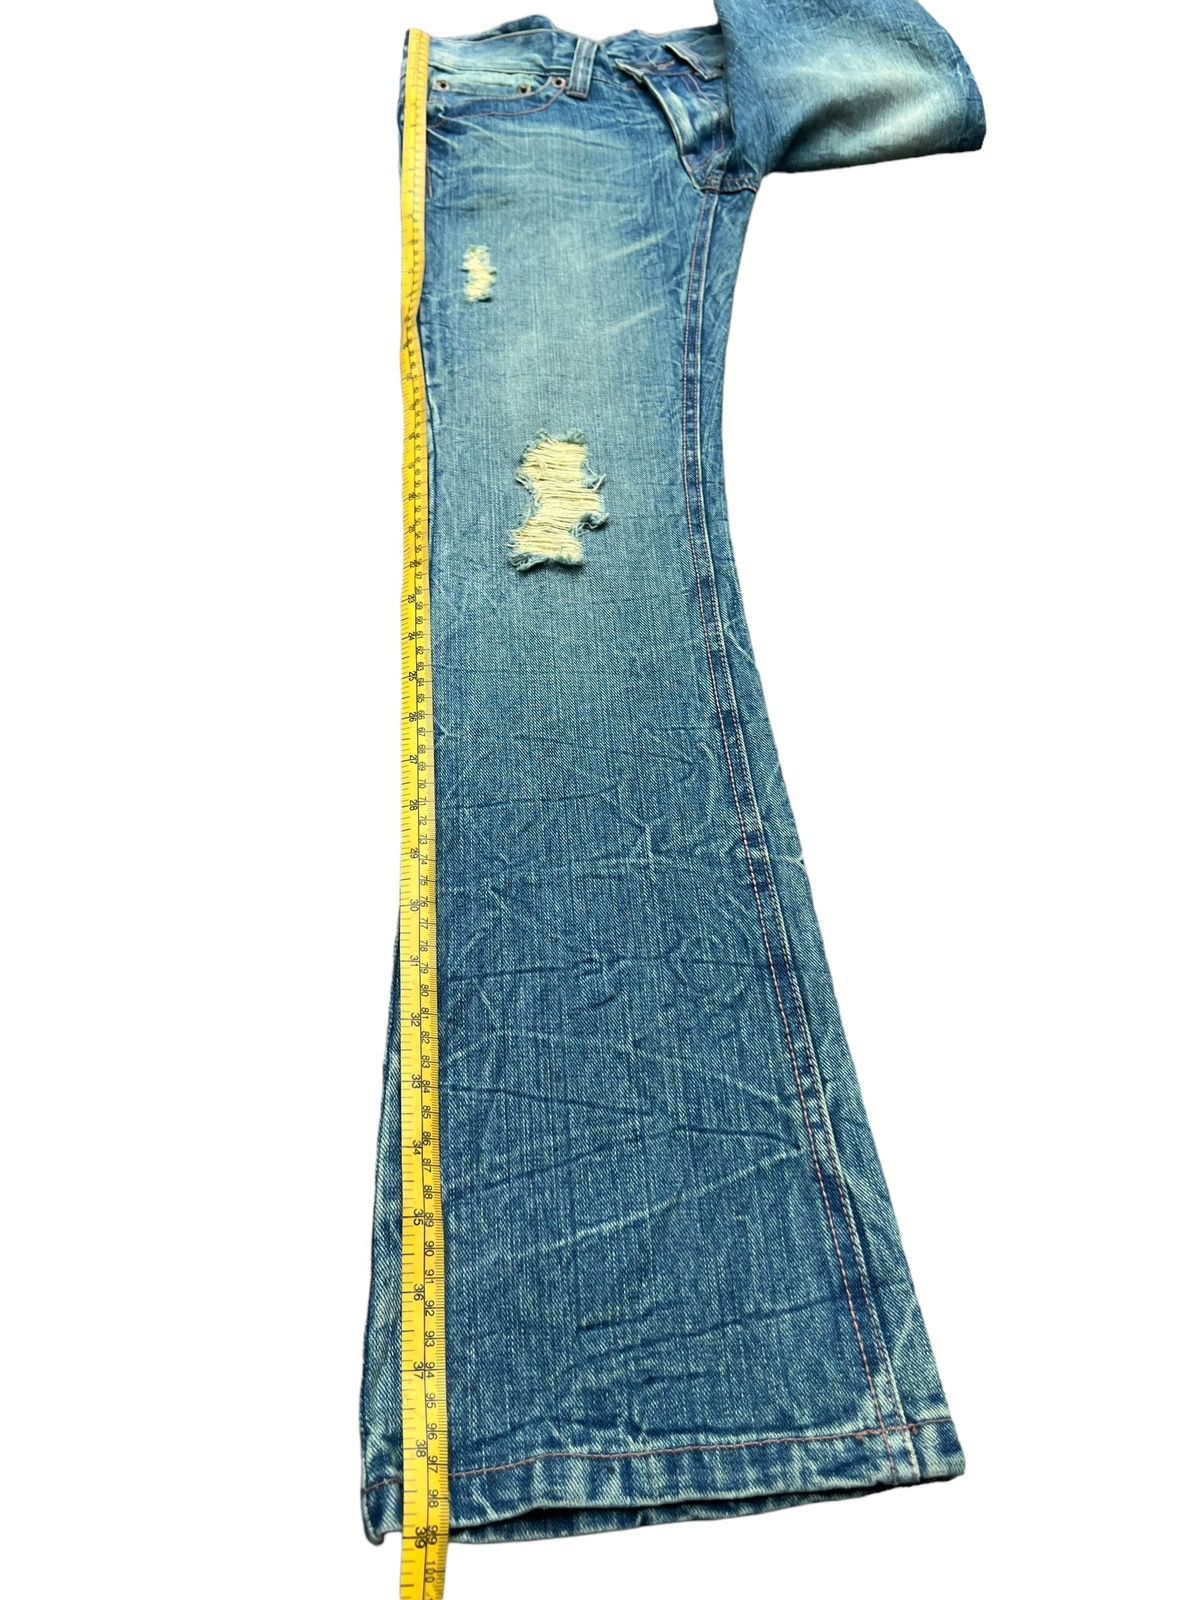 Hype - Japanese Brand Distressed Mudwash Flare Denim Jeans 28x30.5 - 10